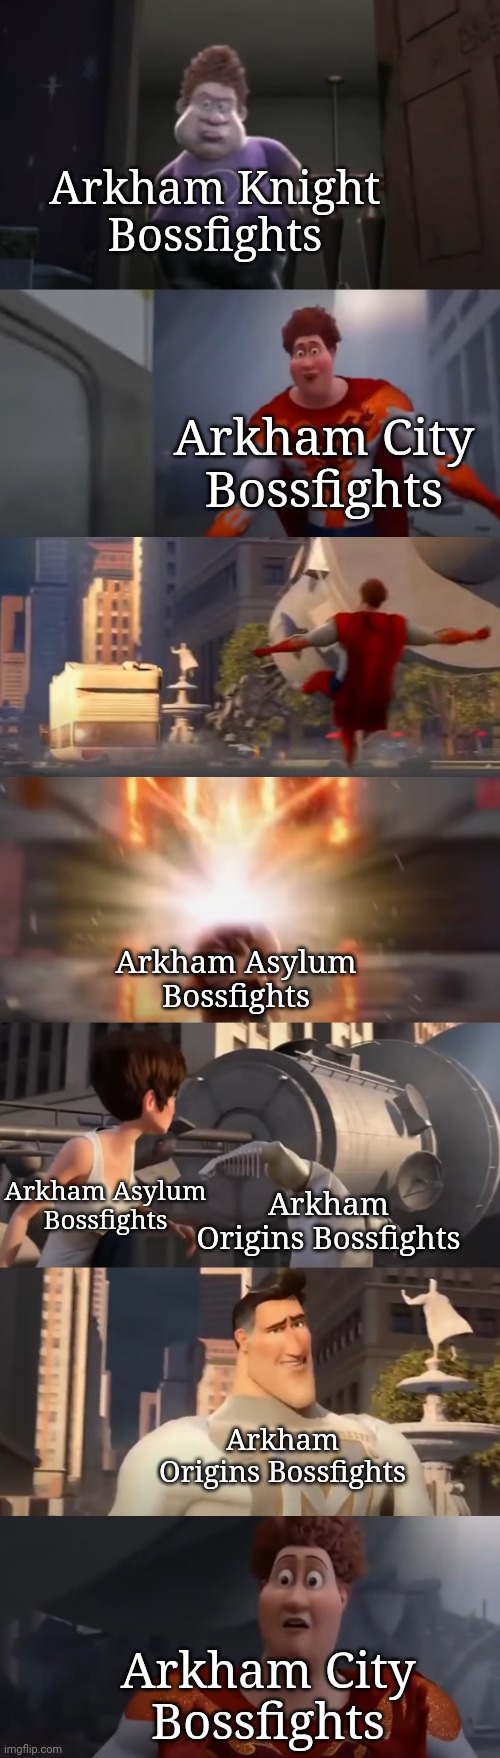 Snotty Boy Glow Up Meme extended | Arkham Knight Bossfights; Arkham City Bossfights; Arkham Asylum Bossfights; Arkham Asylum Bossfights; Arkham Origins Bossfights; Arkham Origins Bossfights; Arkham City Bossfights | image tagged in snotty boy glow up meme extended | made w/ Imgflip meme maker